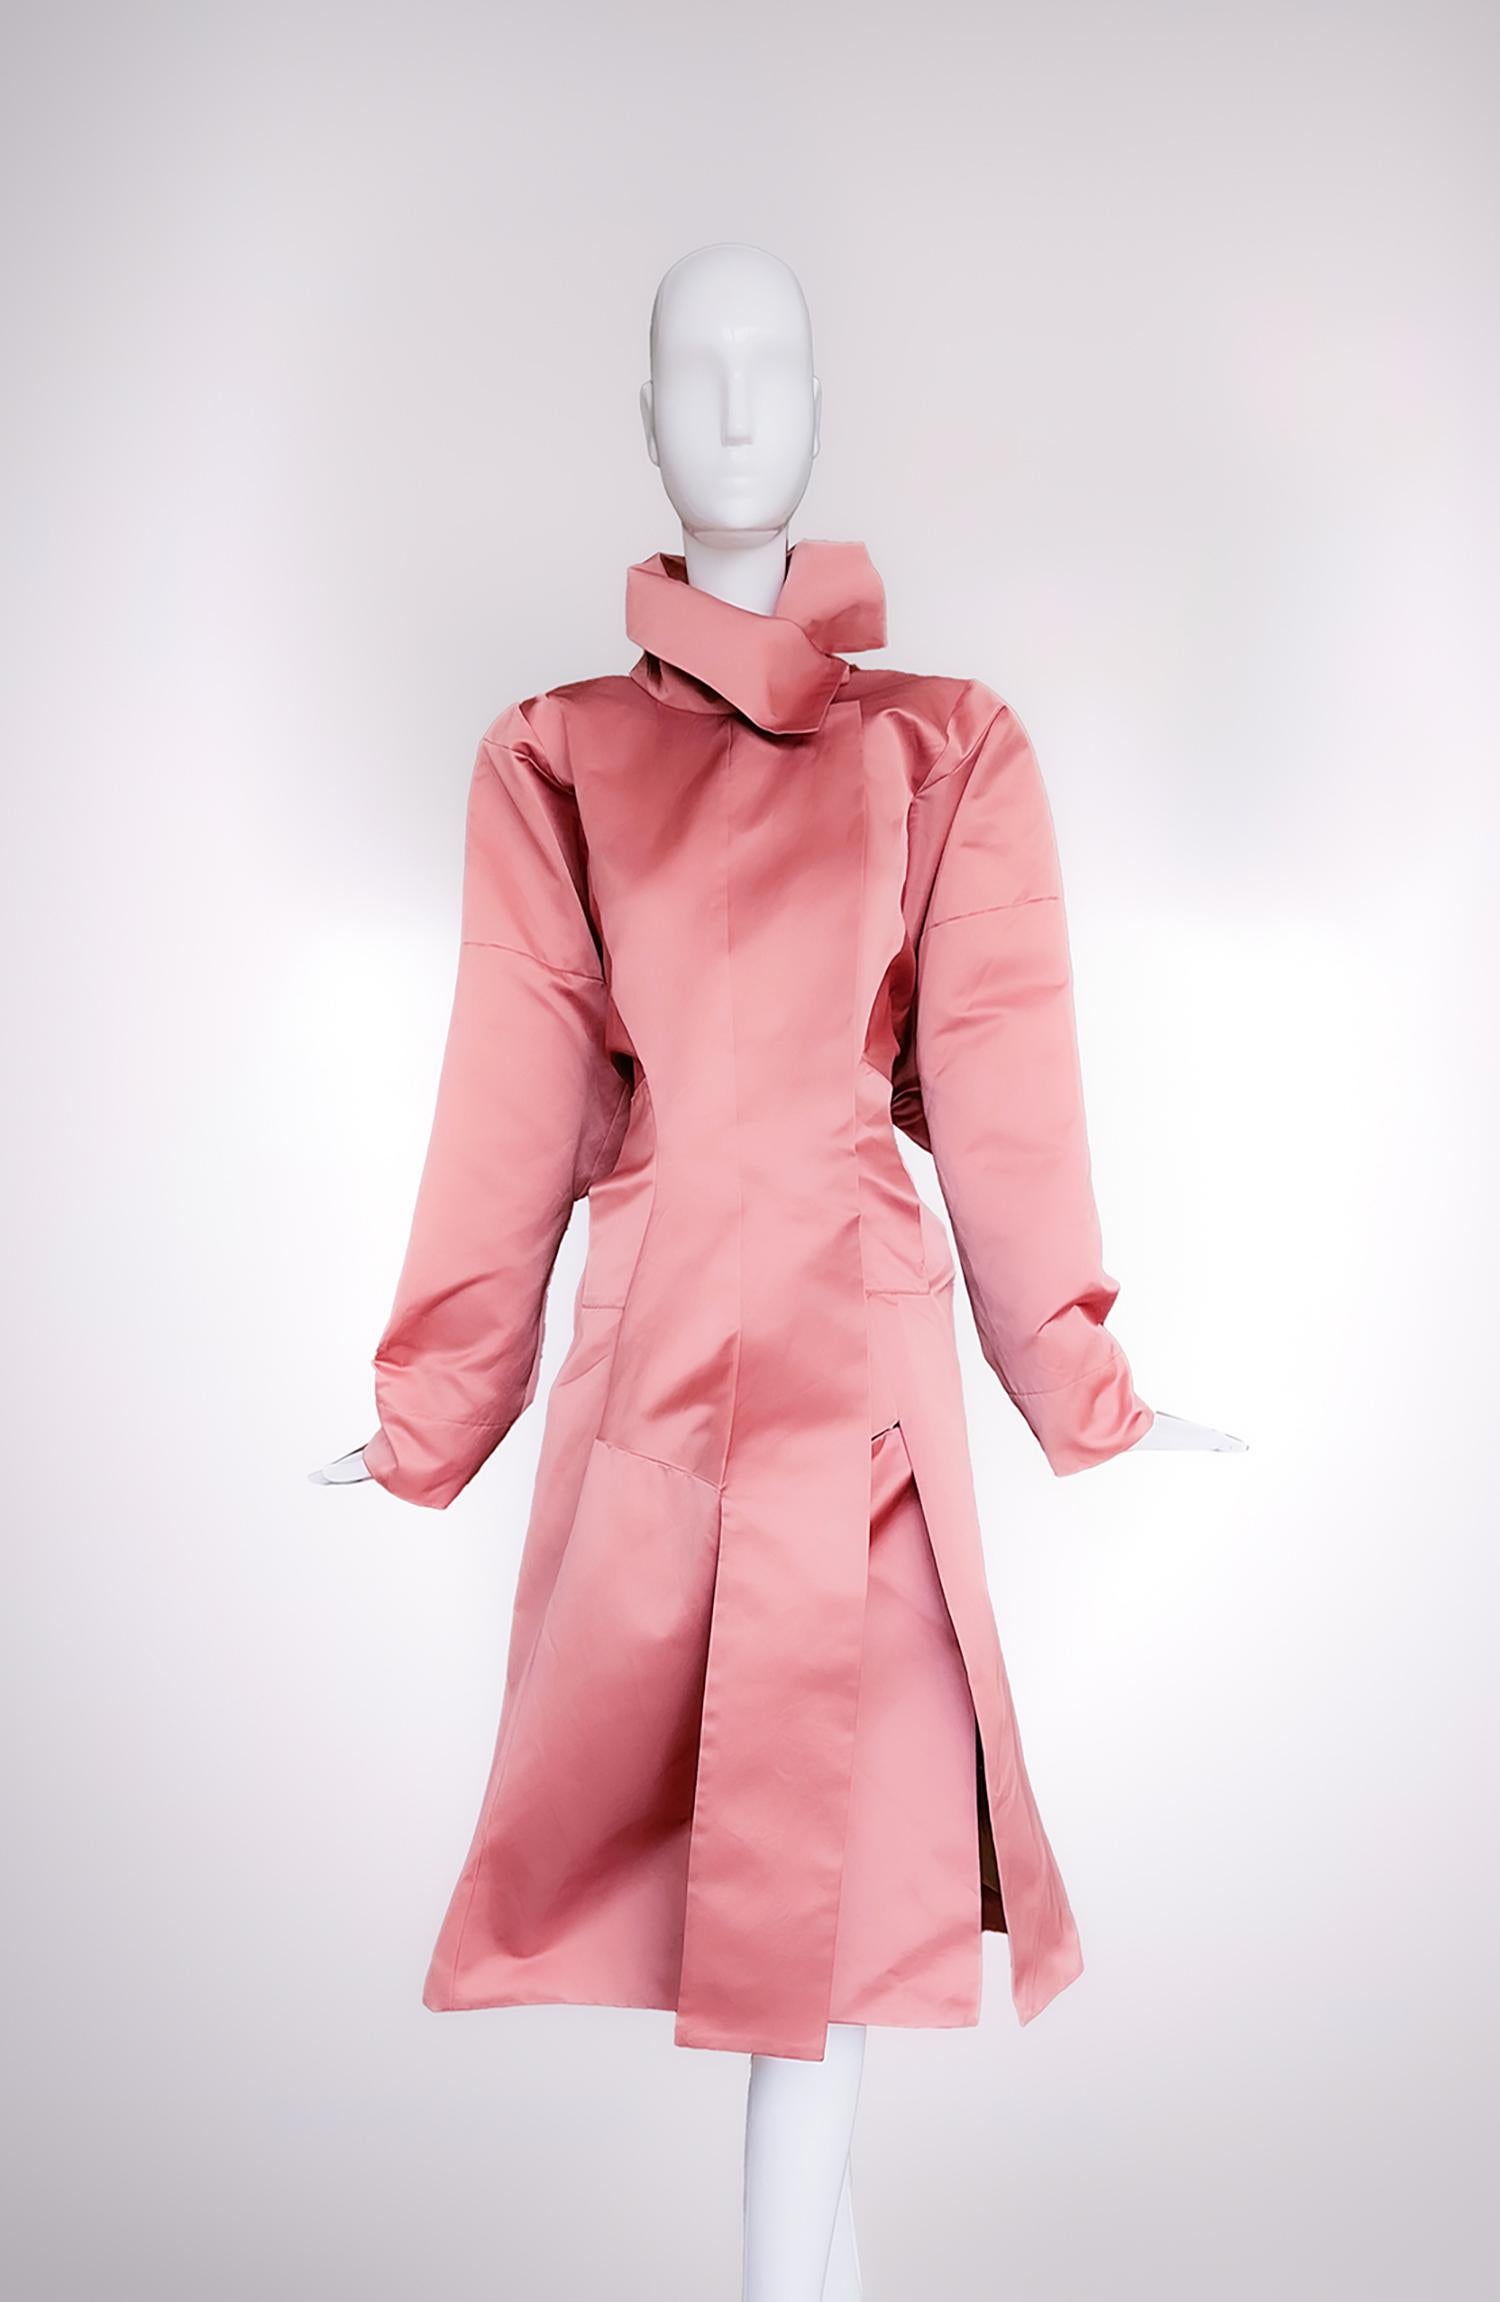 Vivienne Westwood SS 2021 BAT COAT Satin Jacket Oversize Damatic For Sale 3